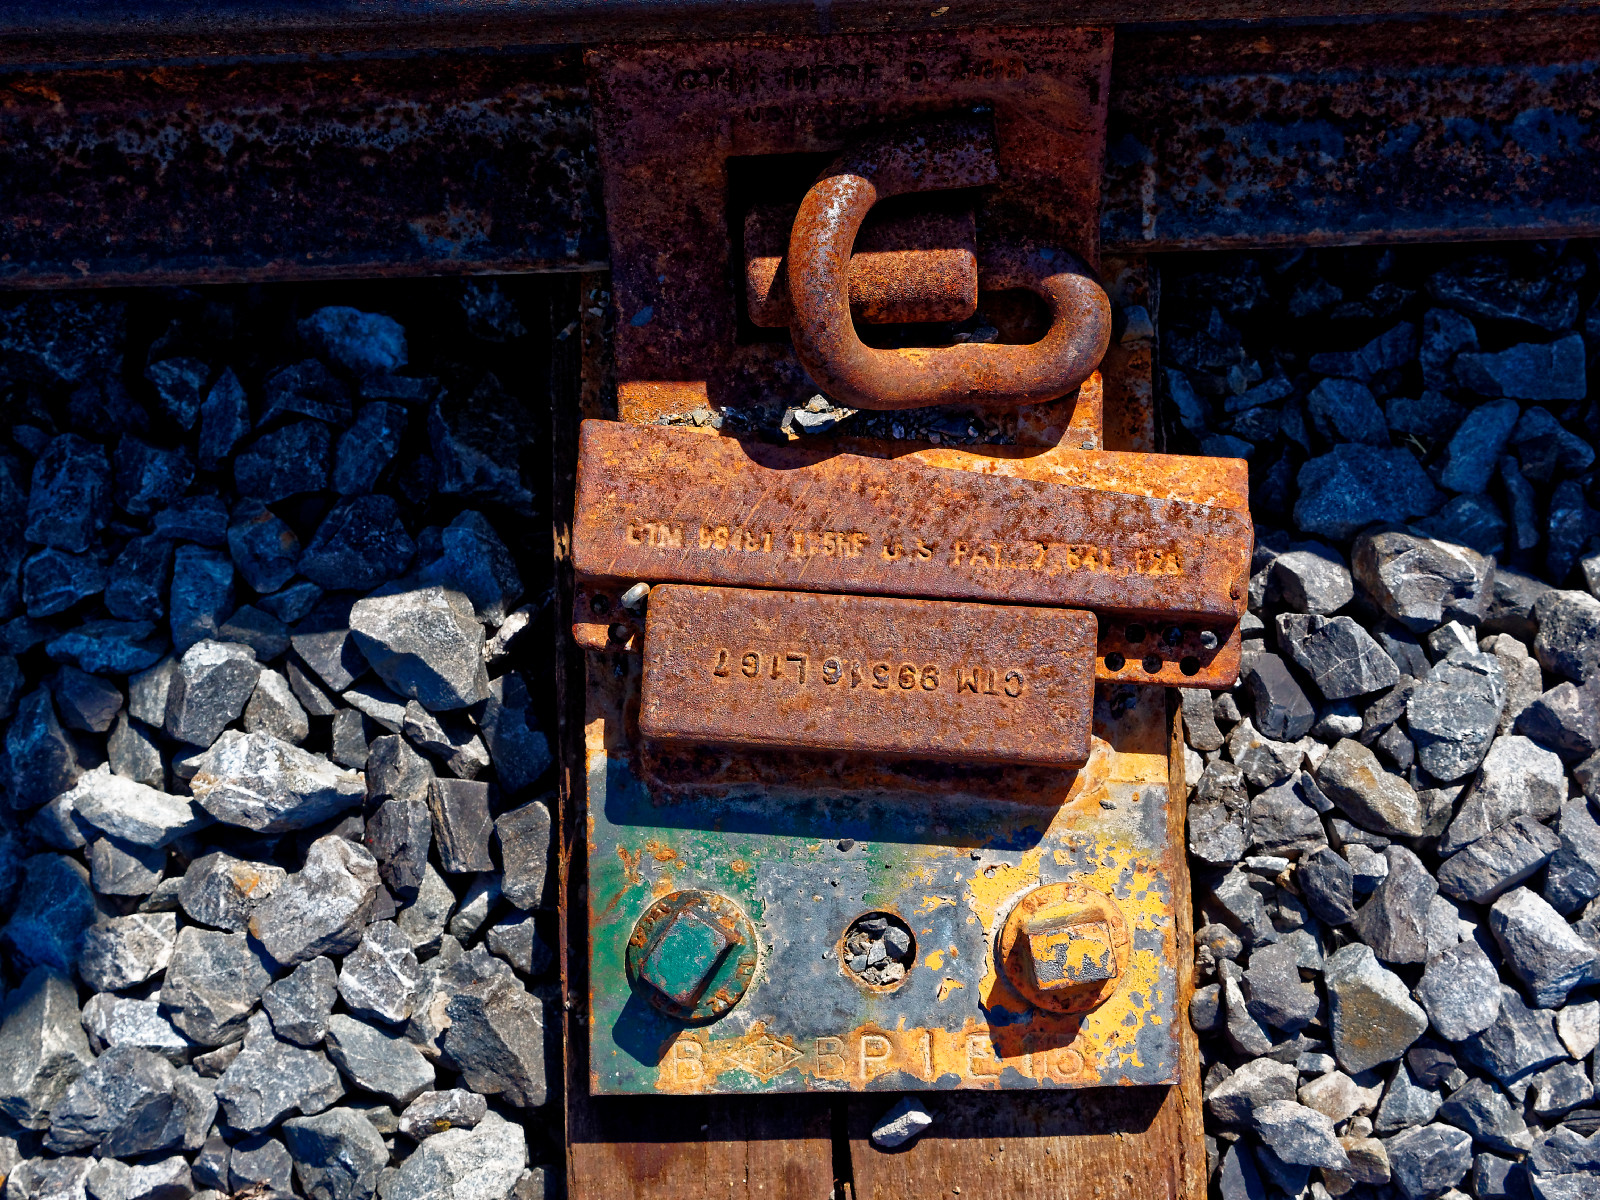 http://thedigitalstory.com/2015/09/02/railroad-web-d-story.jpg